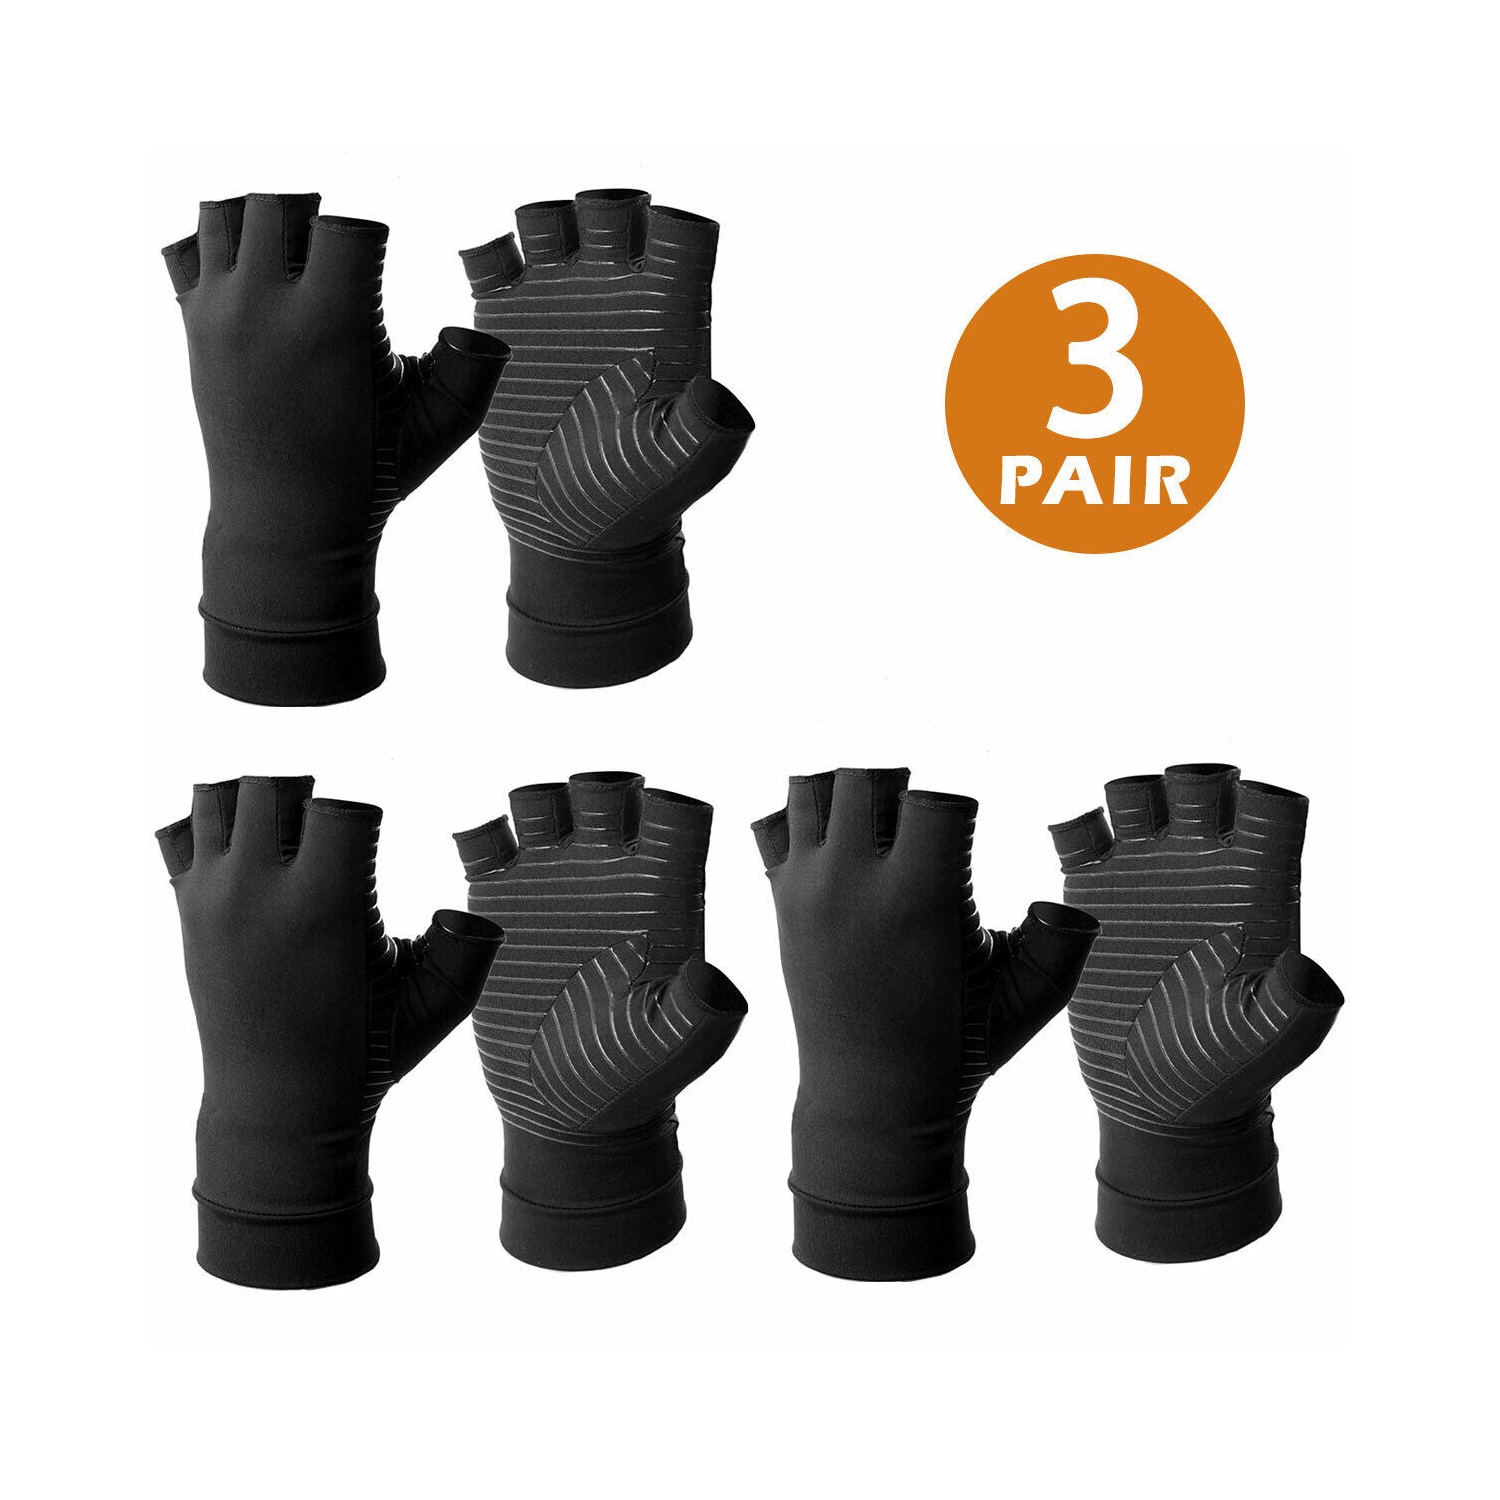 Buy Copper Joe-Compression Half Finger Arthritis Gloves 1 Pair (Medium) ,  Copper Compression Gloves for Arthritis at ShopLC.